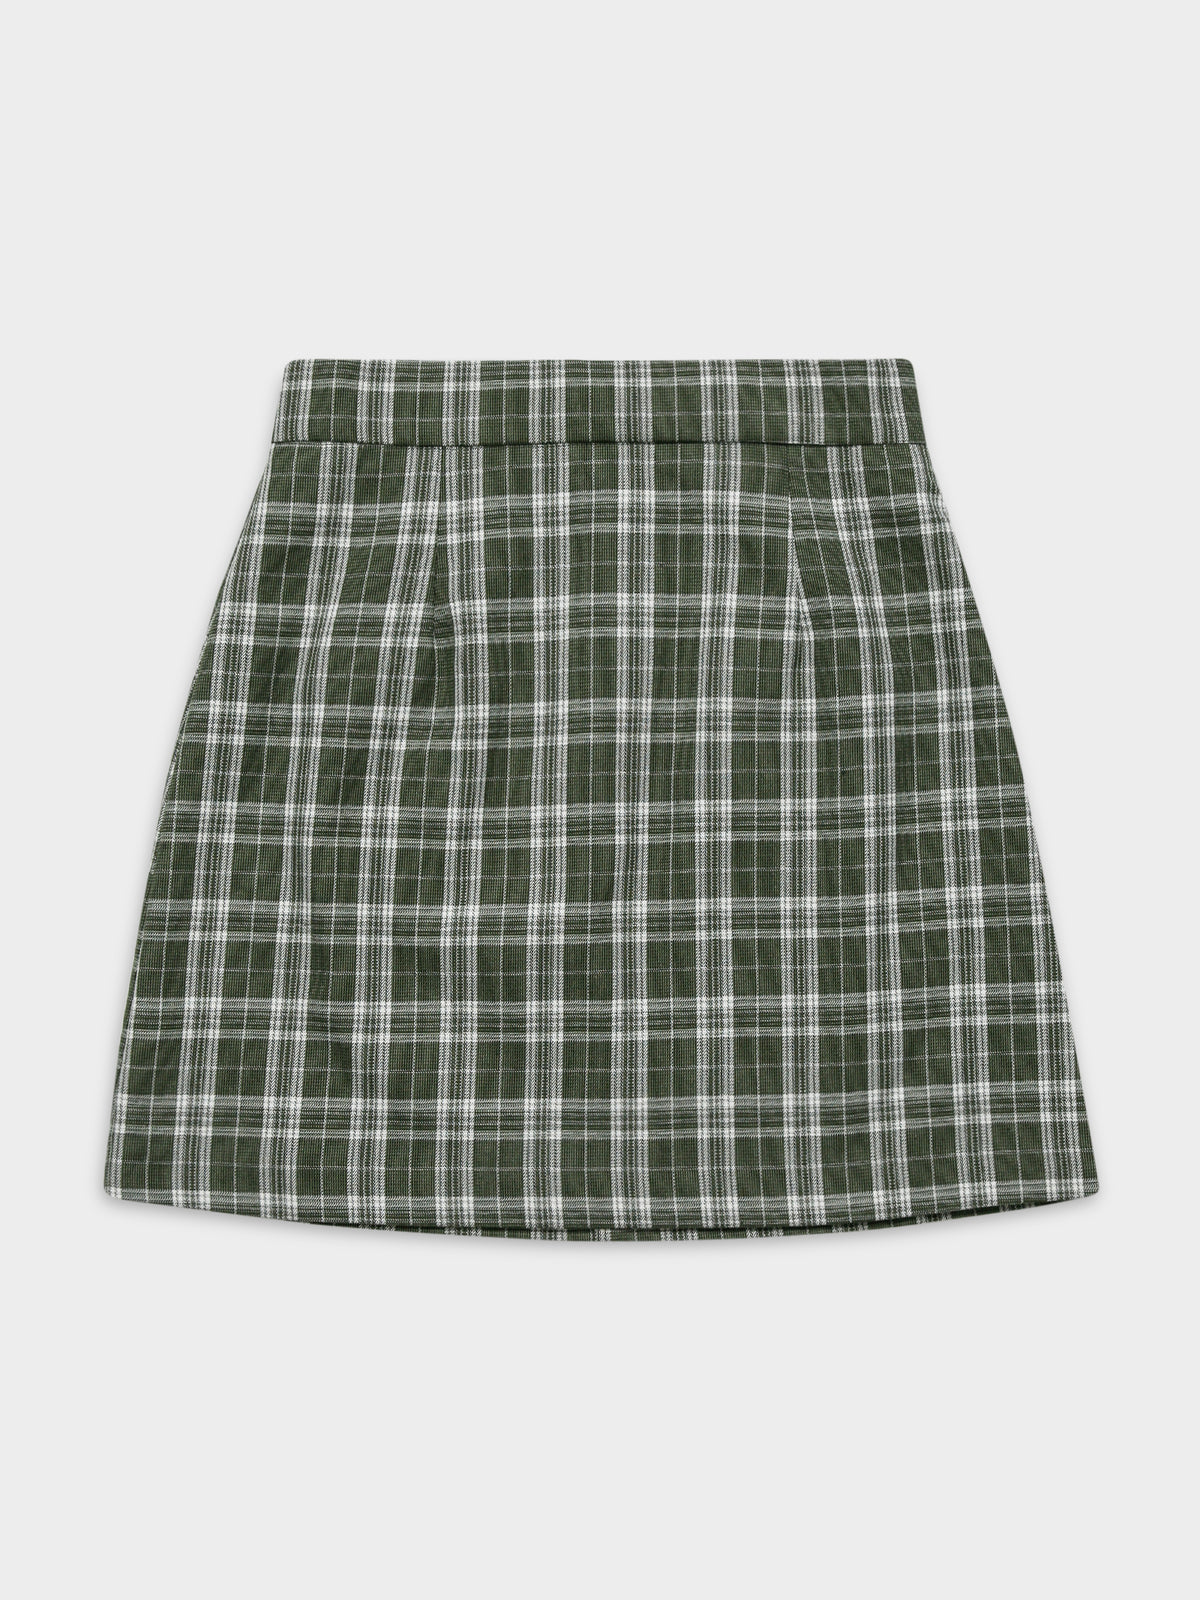 Marina Mini Skirt in Sage Check